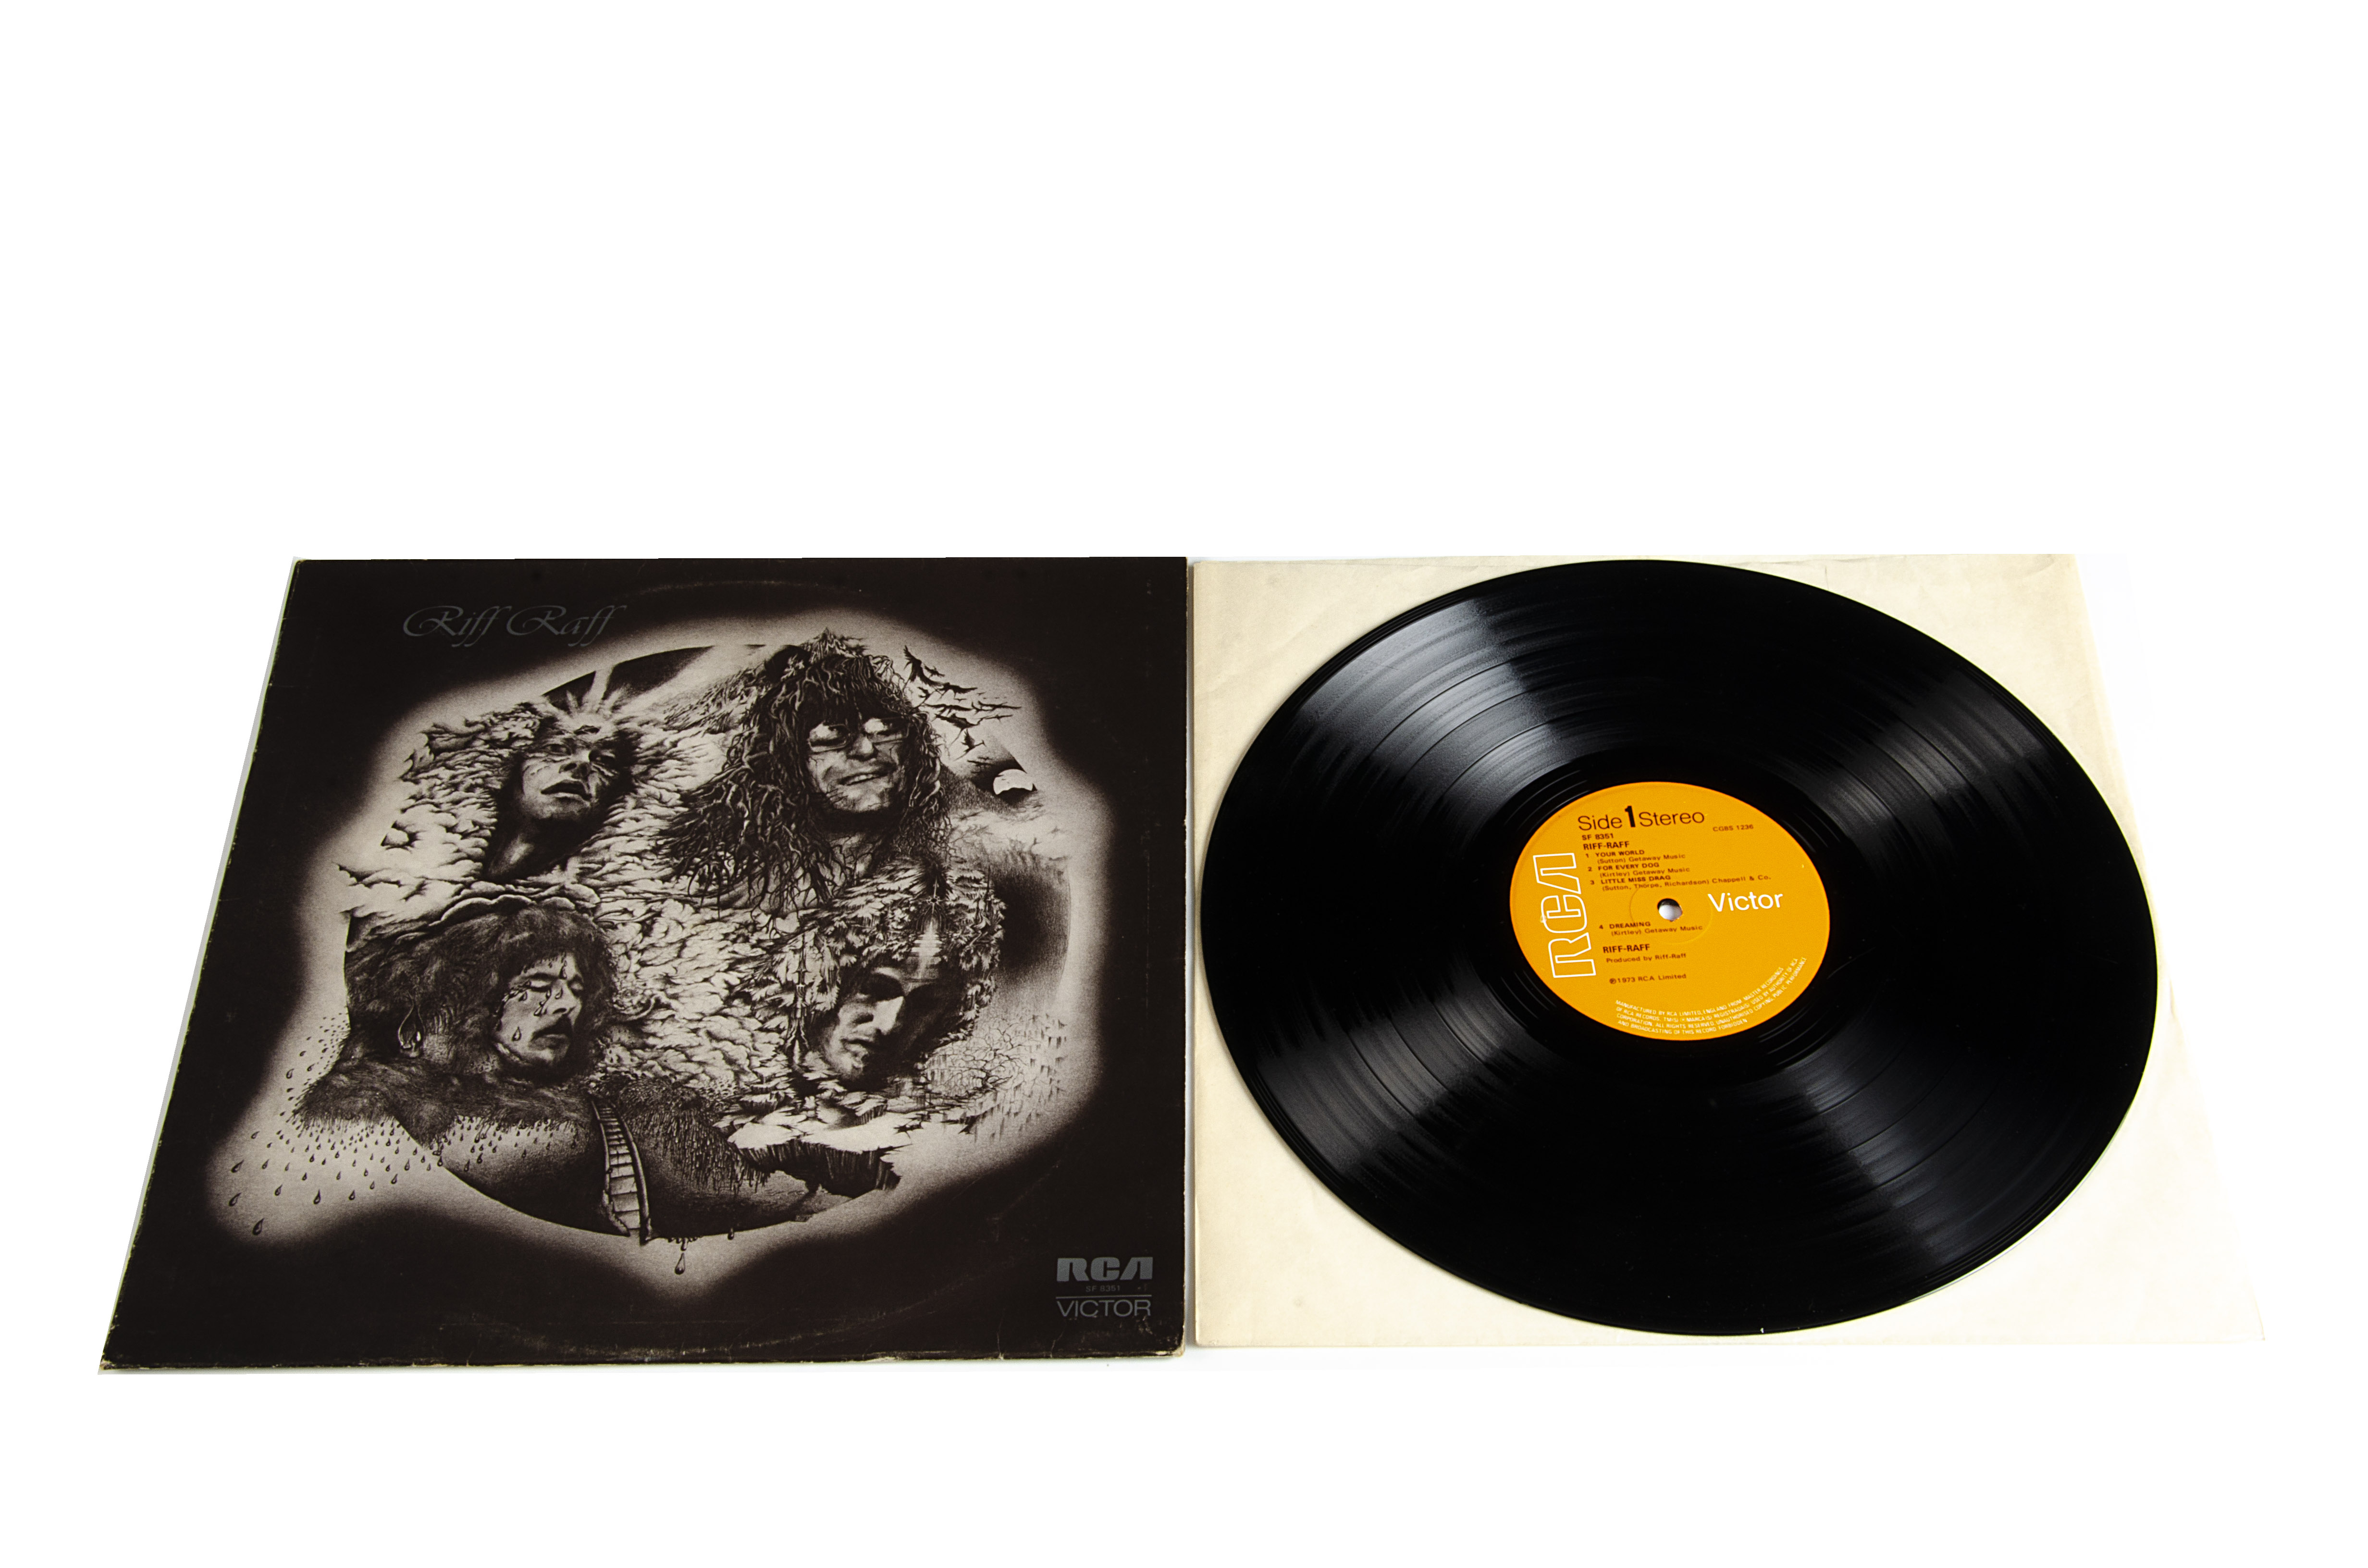 Riff Raff LP, Riff Raff - S/T - Original UK release 1973 on RCA (SF 8351) - Orange Labels - Sleeve